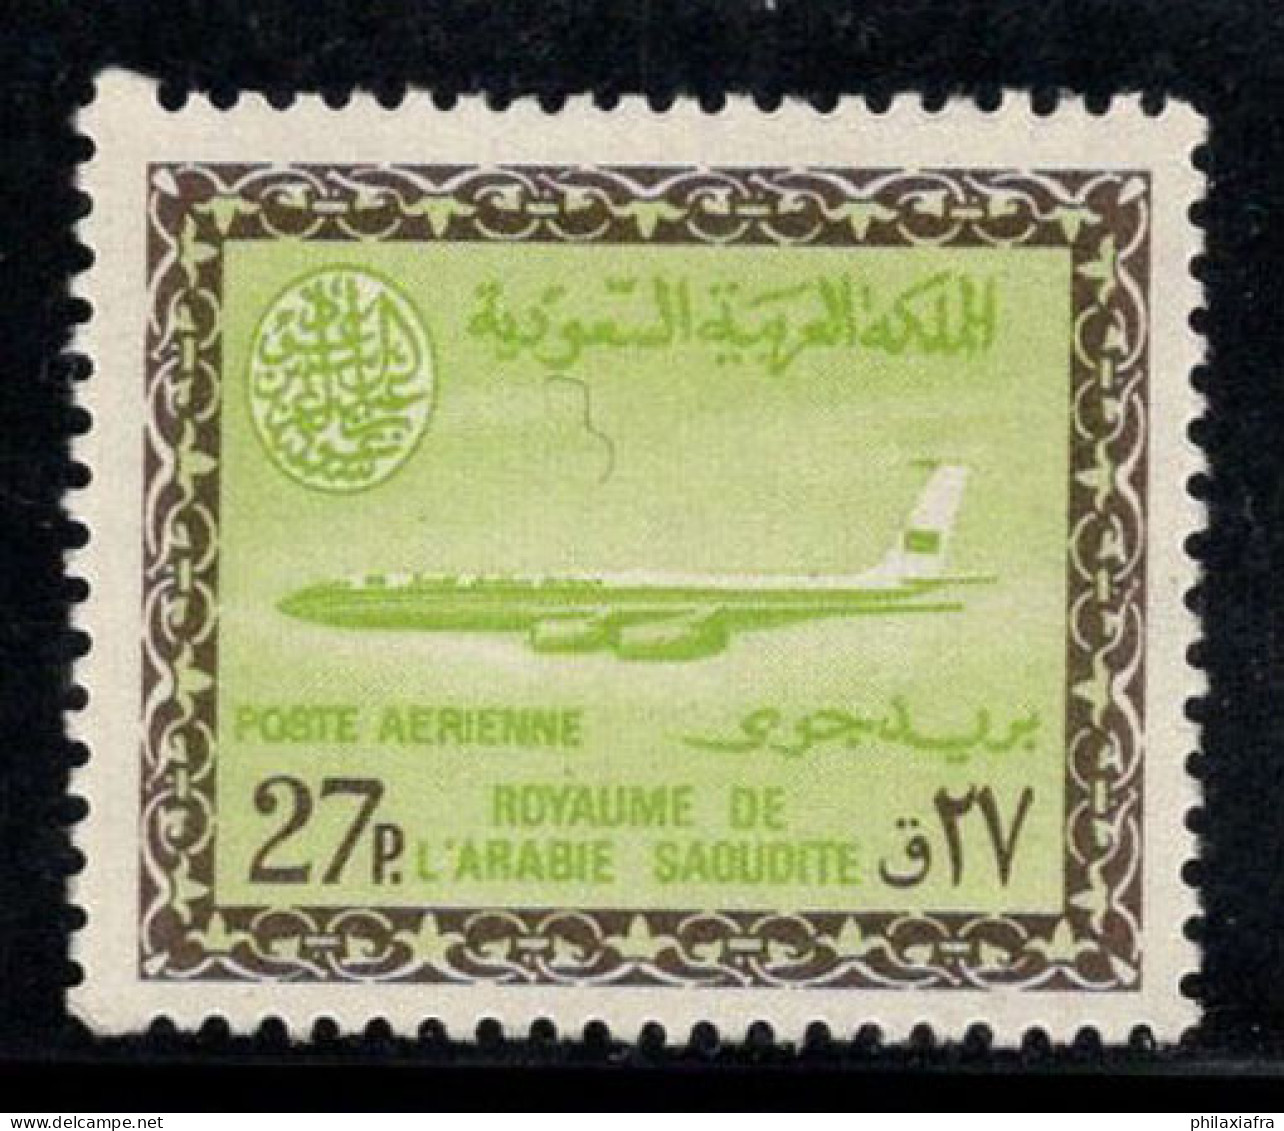 Arabie Saoudite 1965-72 Mi. 264 Neuf ** 100% Poste Aérienne 27 Pia, Boeing 720 B - Saoedi-Arabië